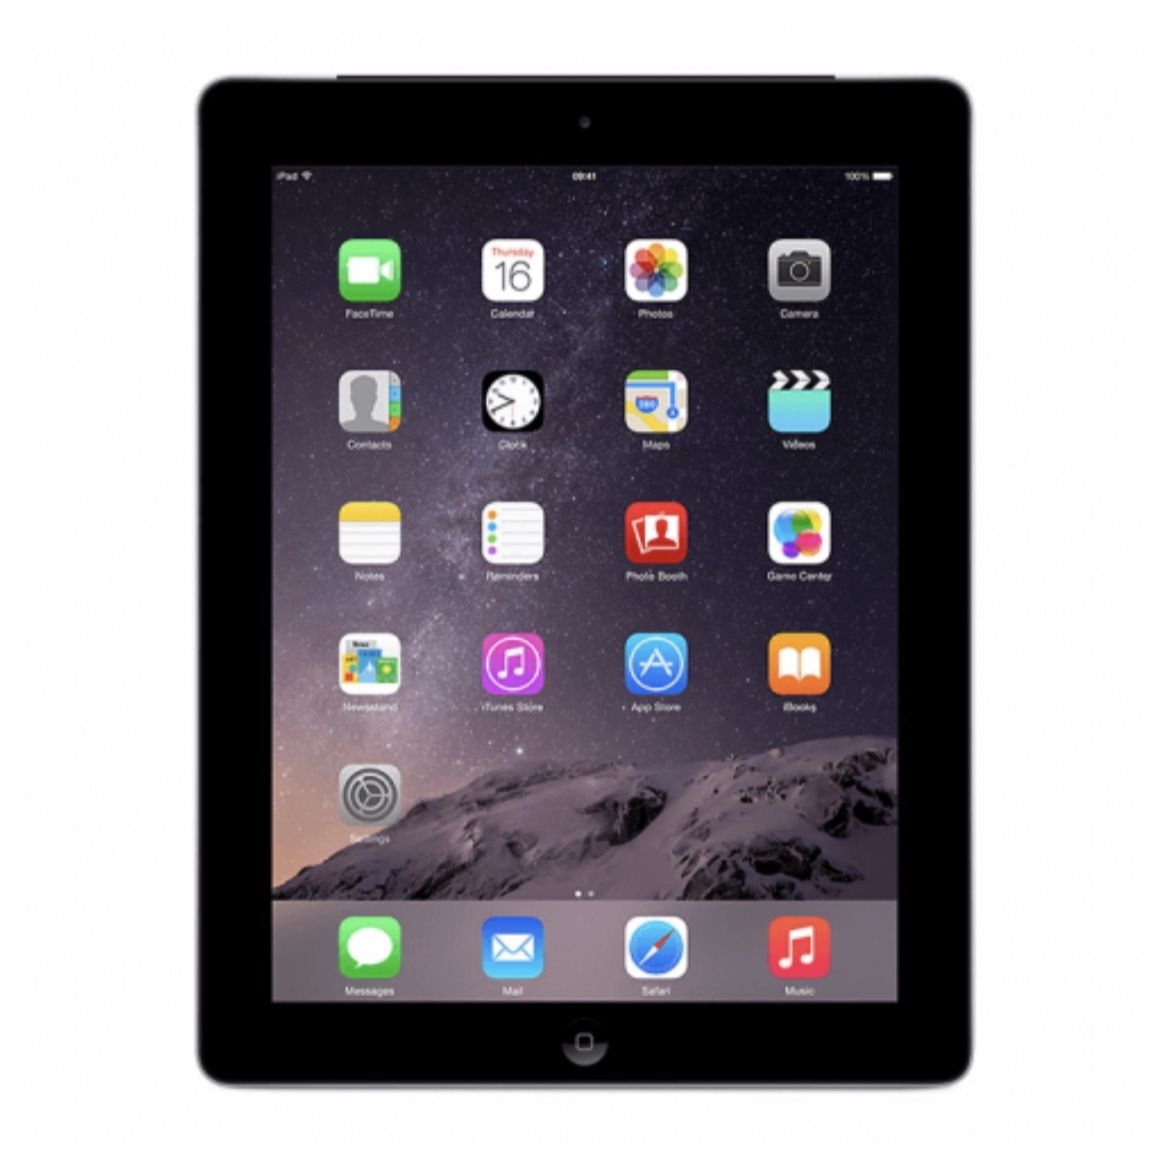 Apple iPads For Sale At https://offerup.com/redirect/?o=emFwcGVkdHJvbmljcy5jb20=